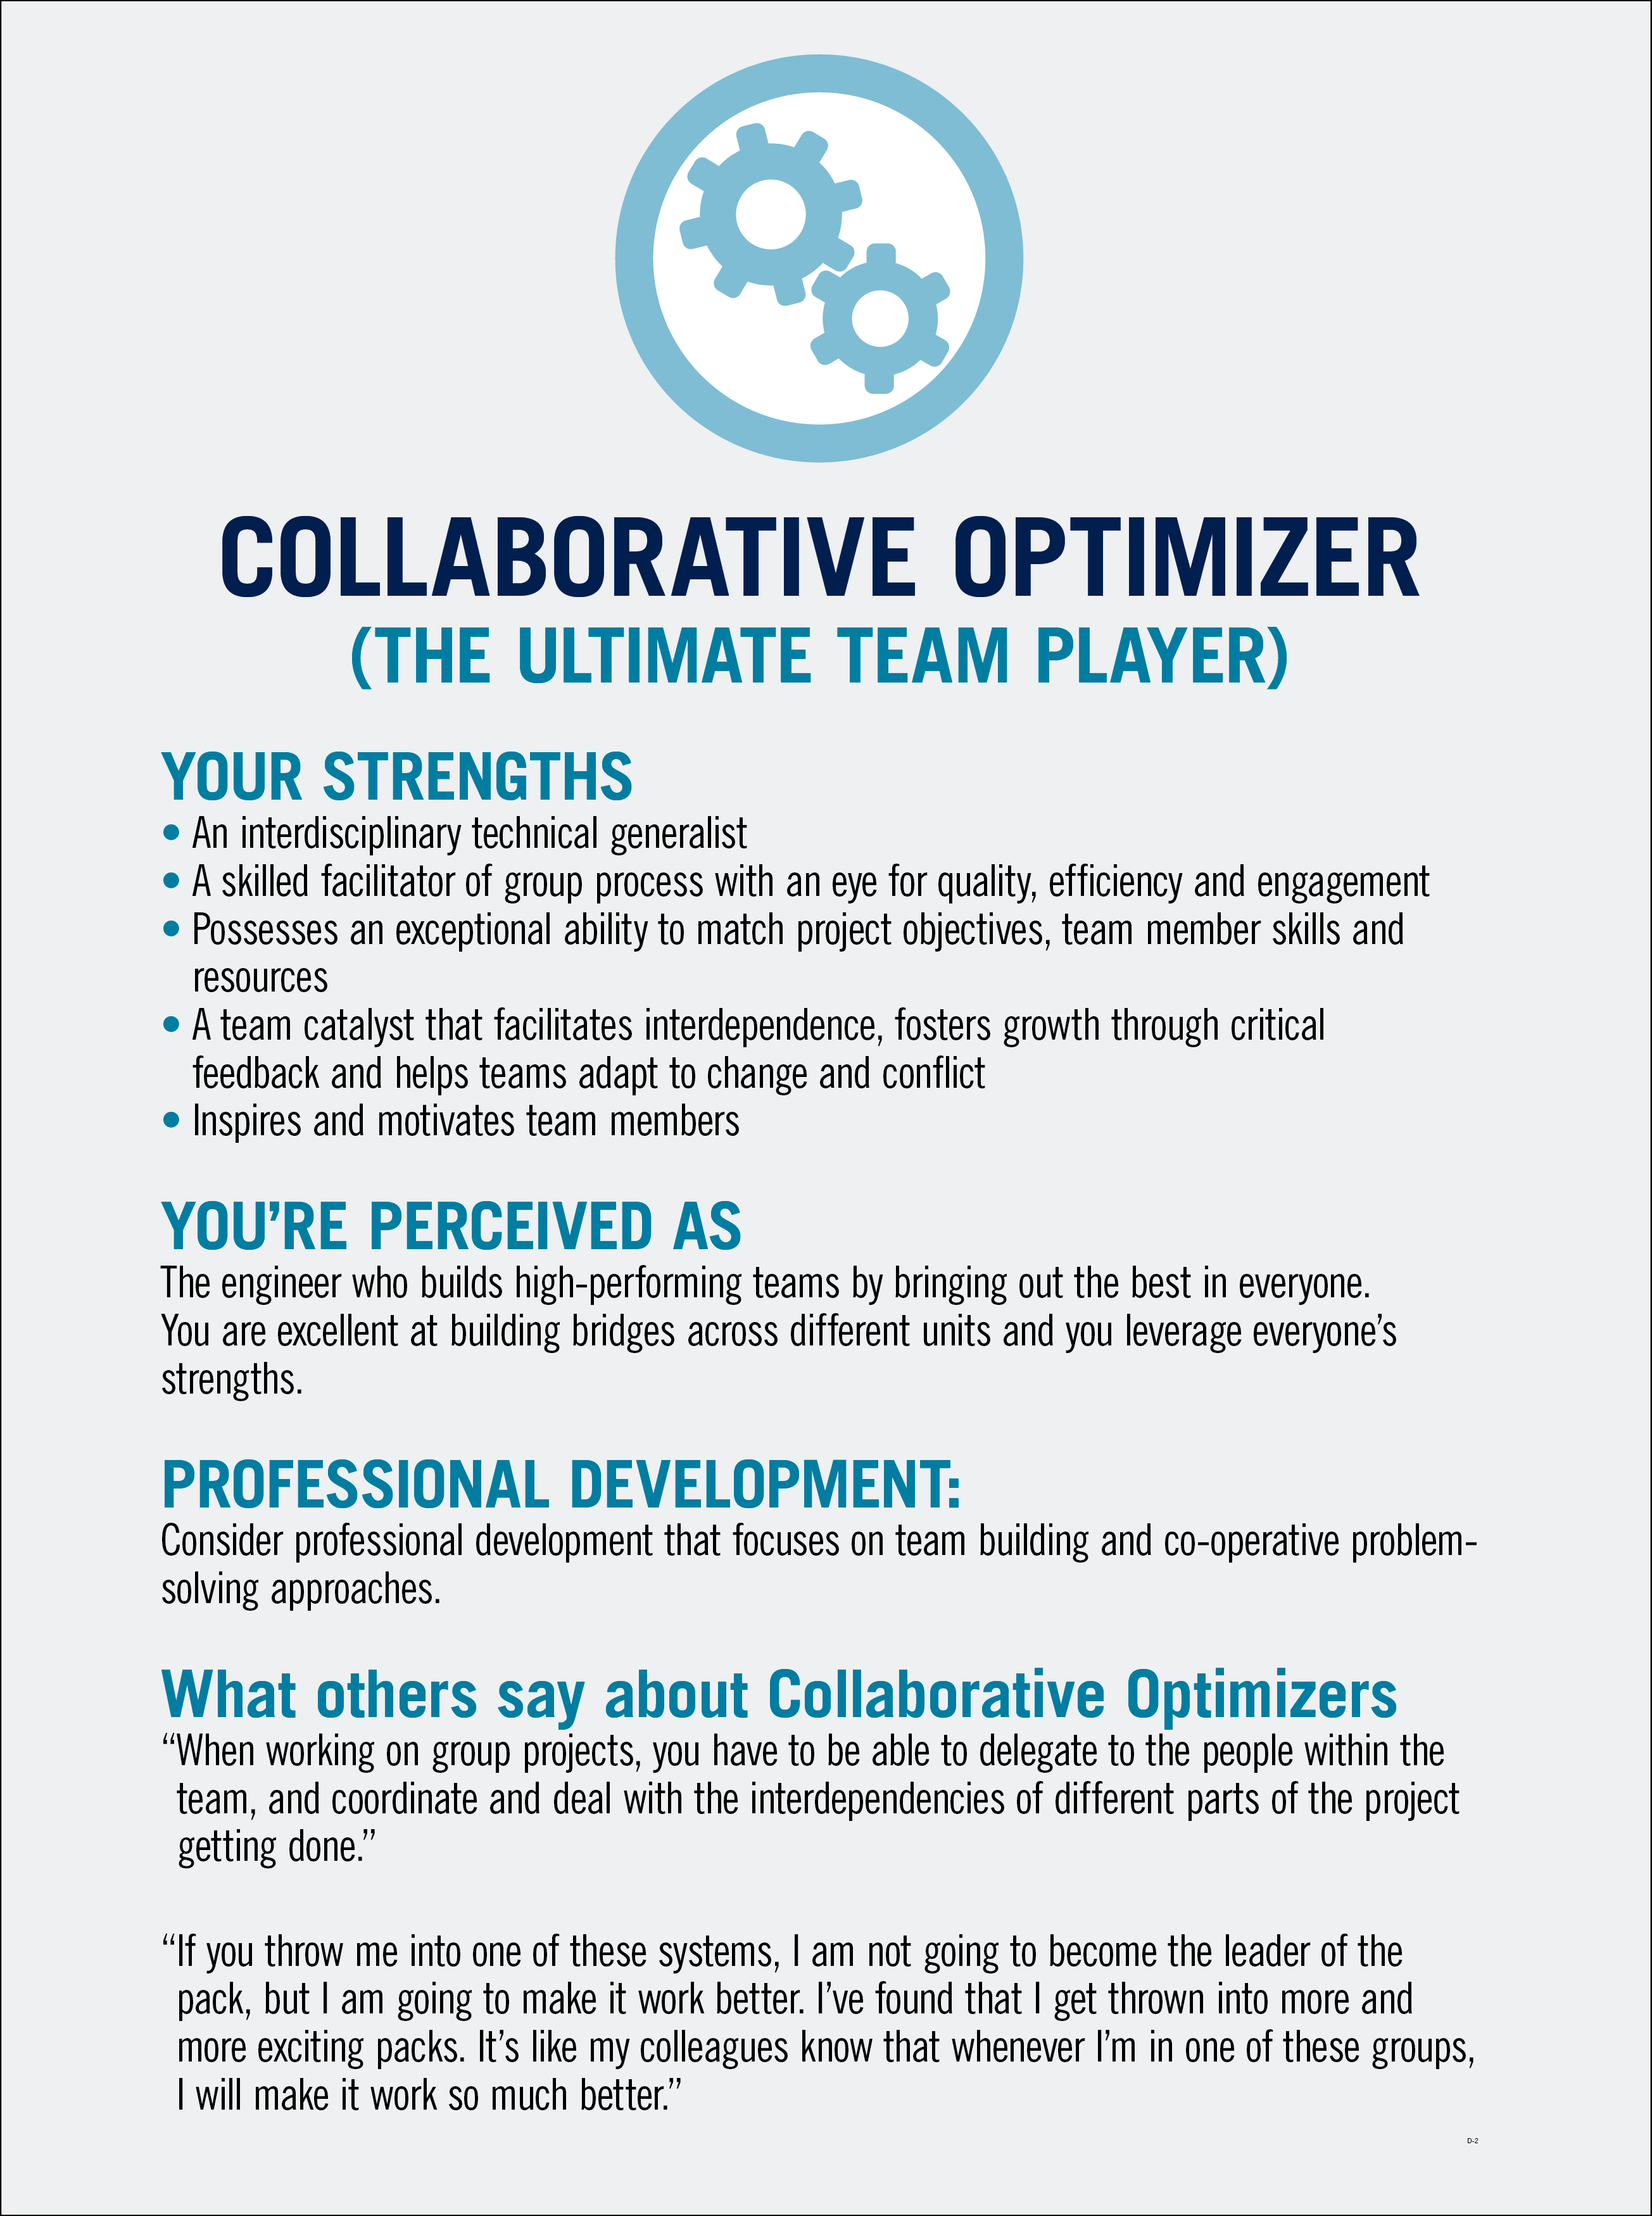 Collaborative Optimizer Characteristics Poster